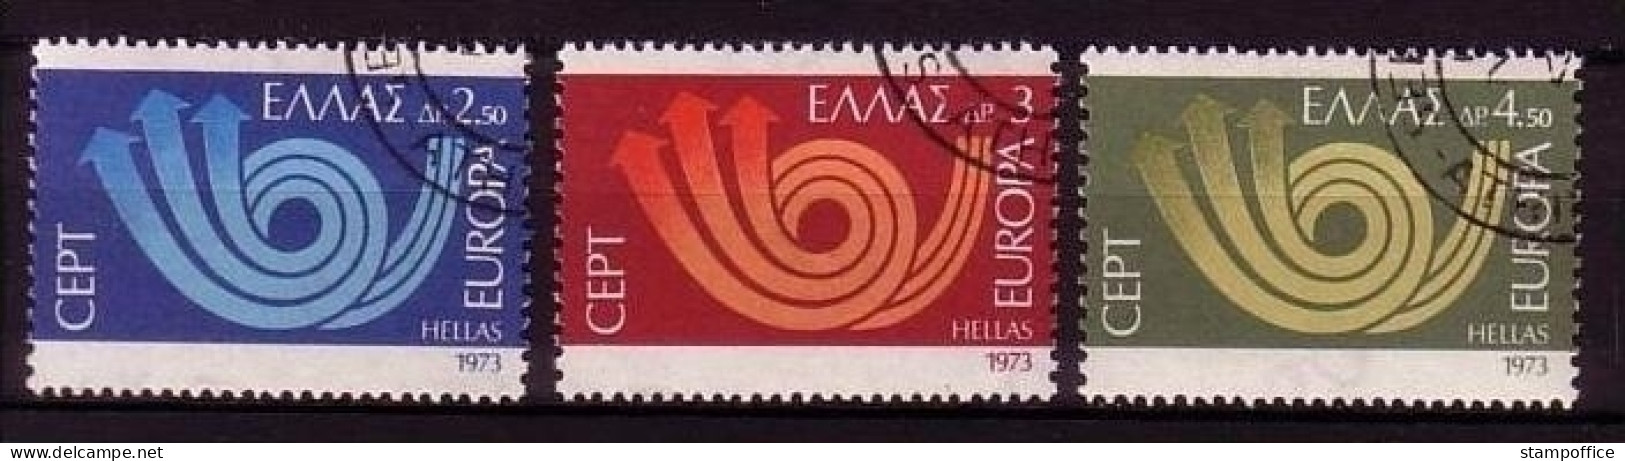 GRIECHENLAND MI-NR. 1147-1149 GESTEMPELT(USED) EUROPA 1973 POSTHORN - 1973